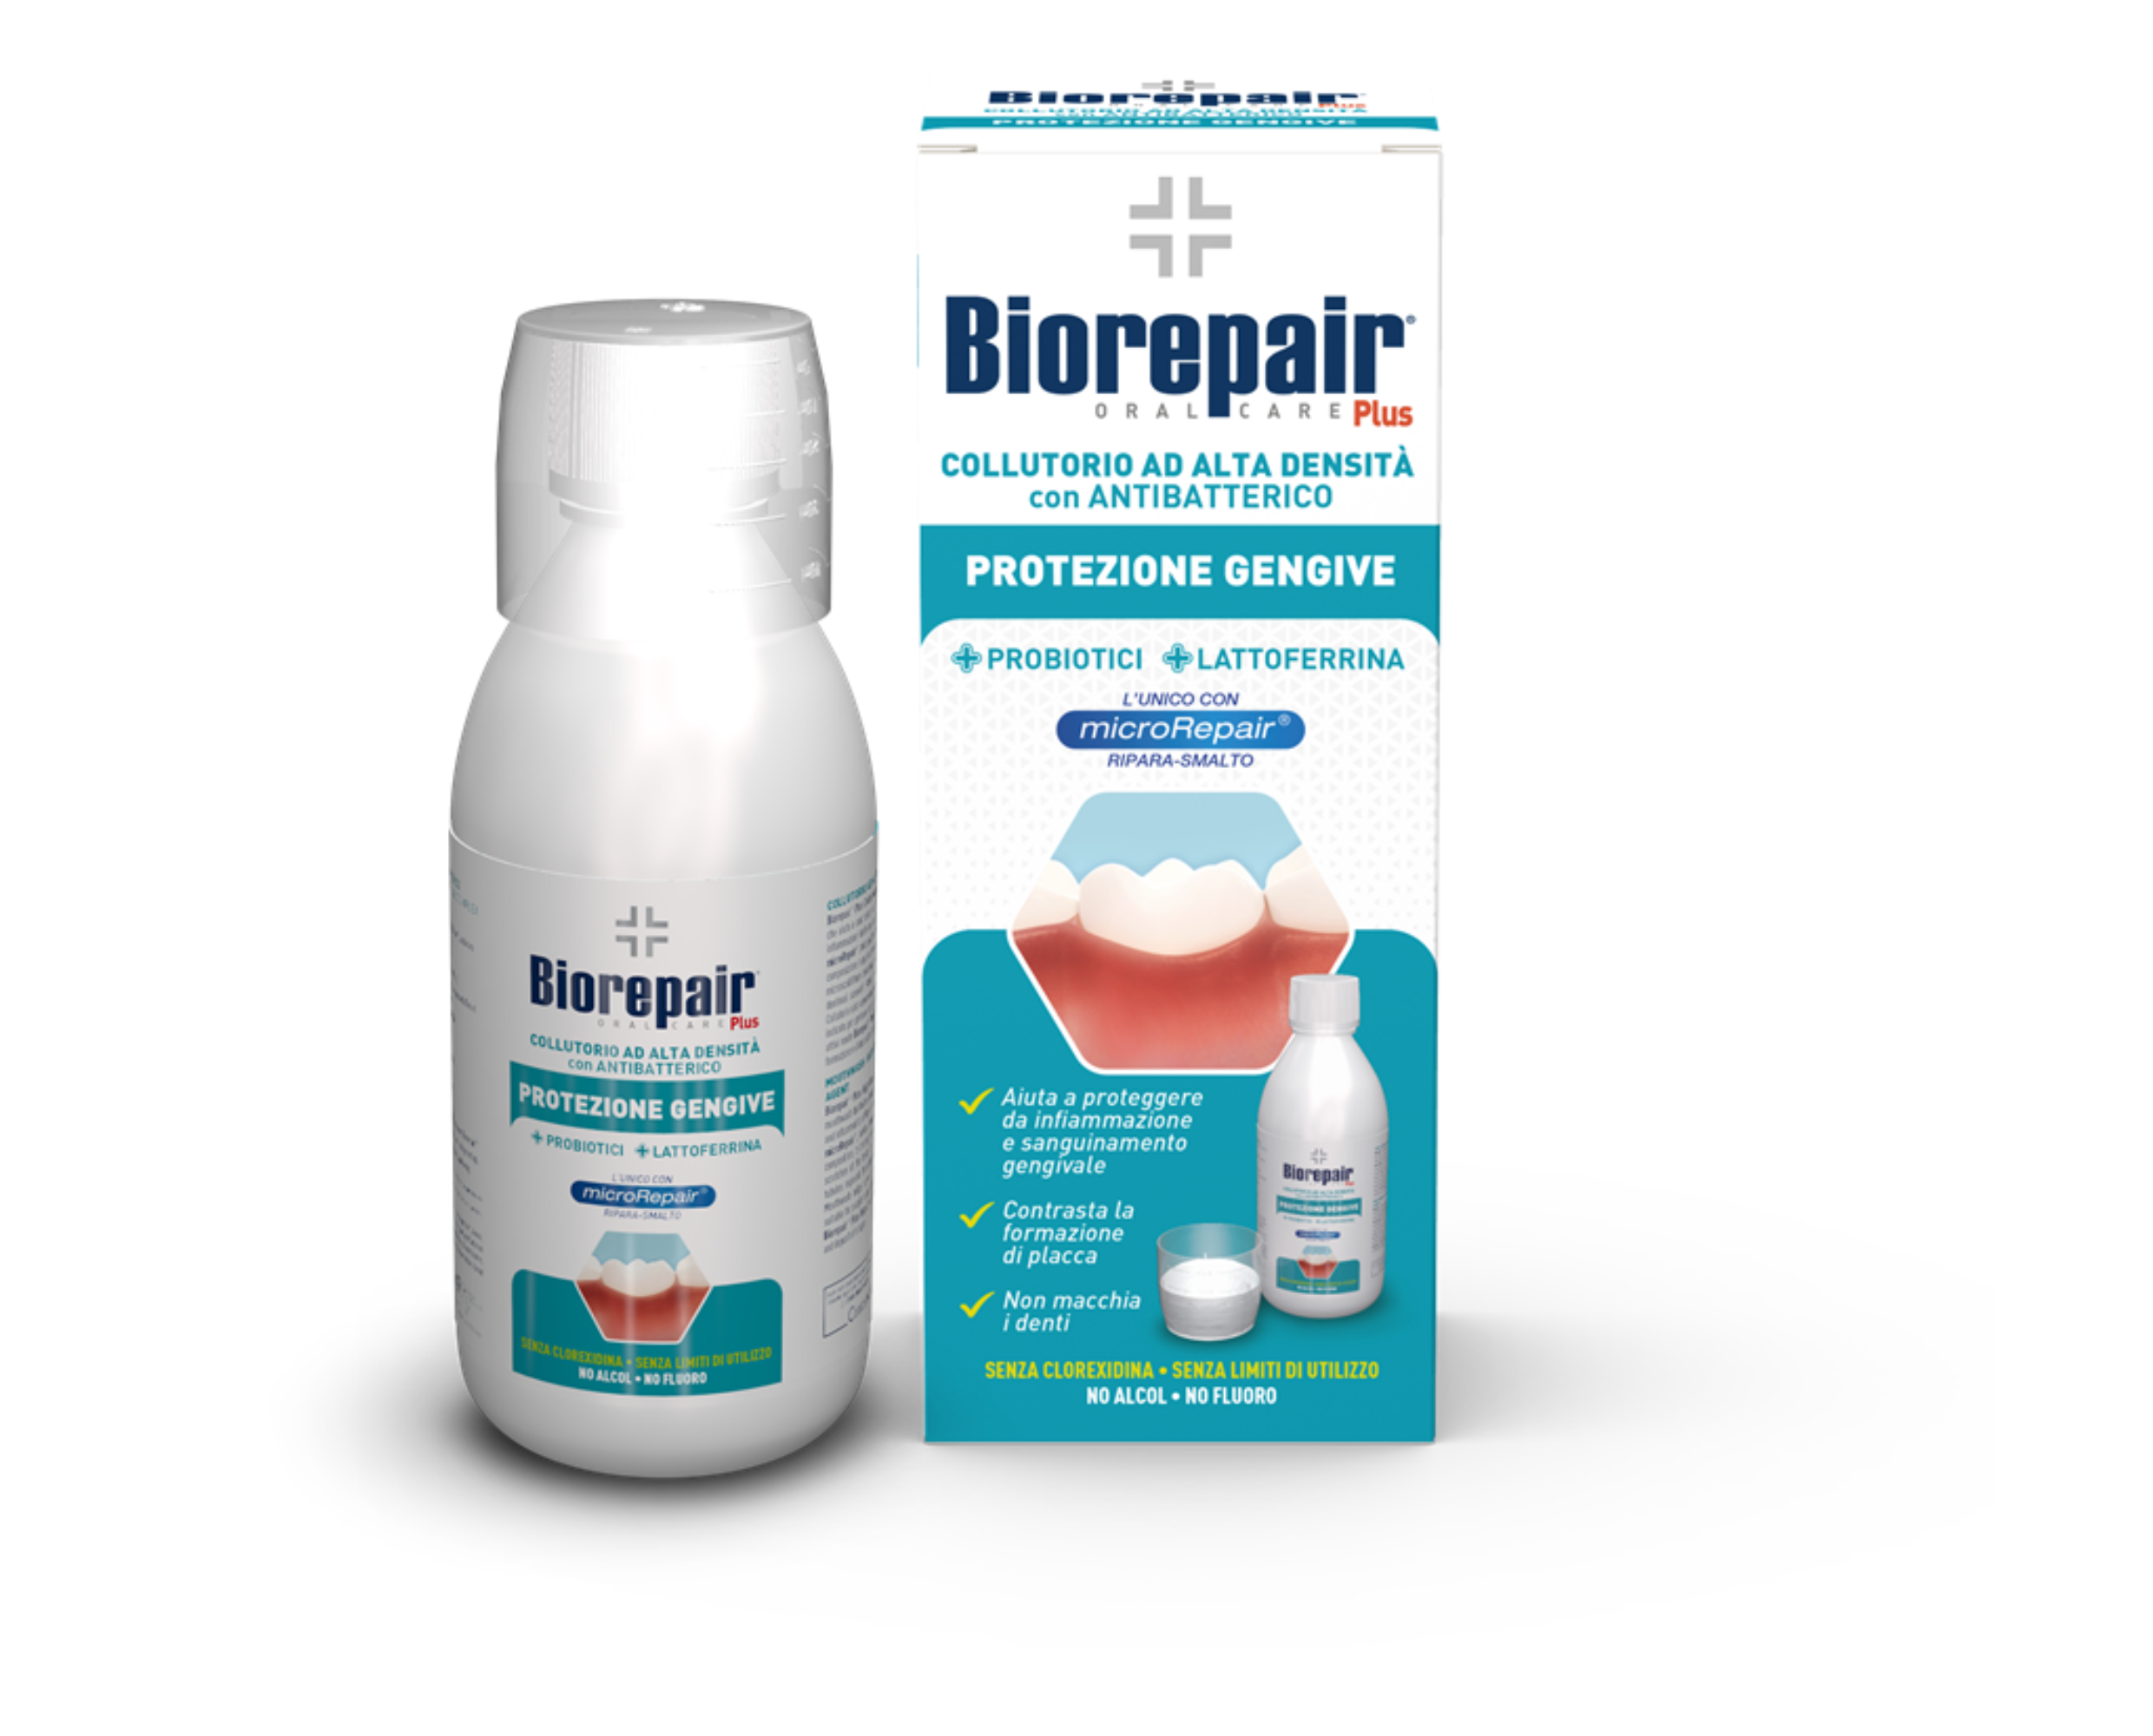 Biorepair® Antibacterial Mouthwash Plus